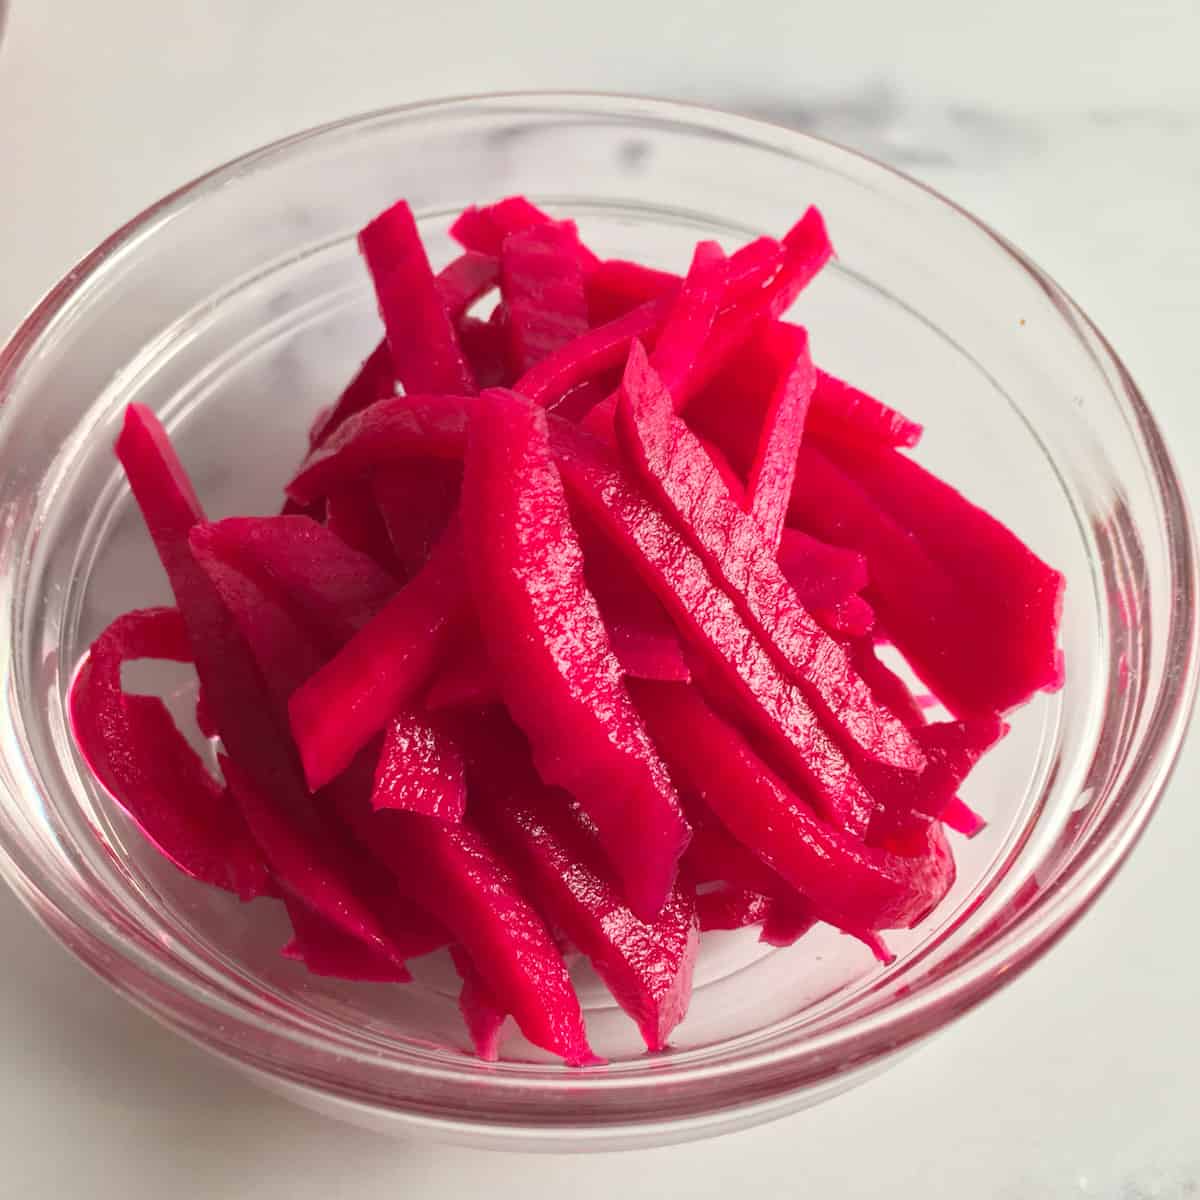 pink salty food ideas